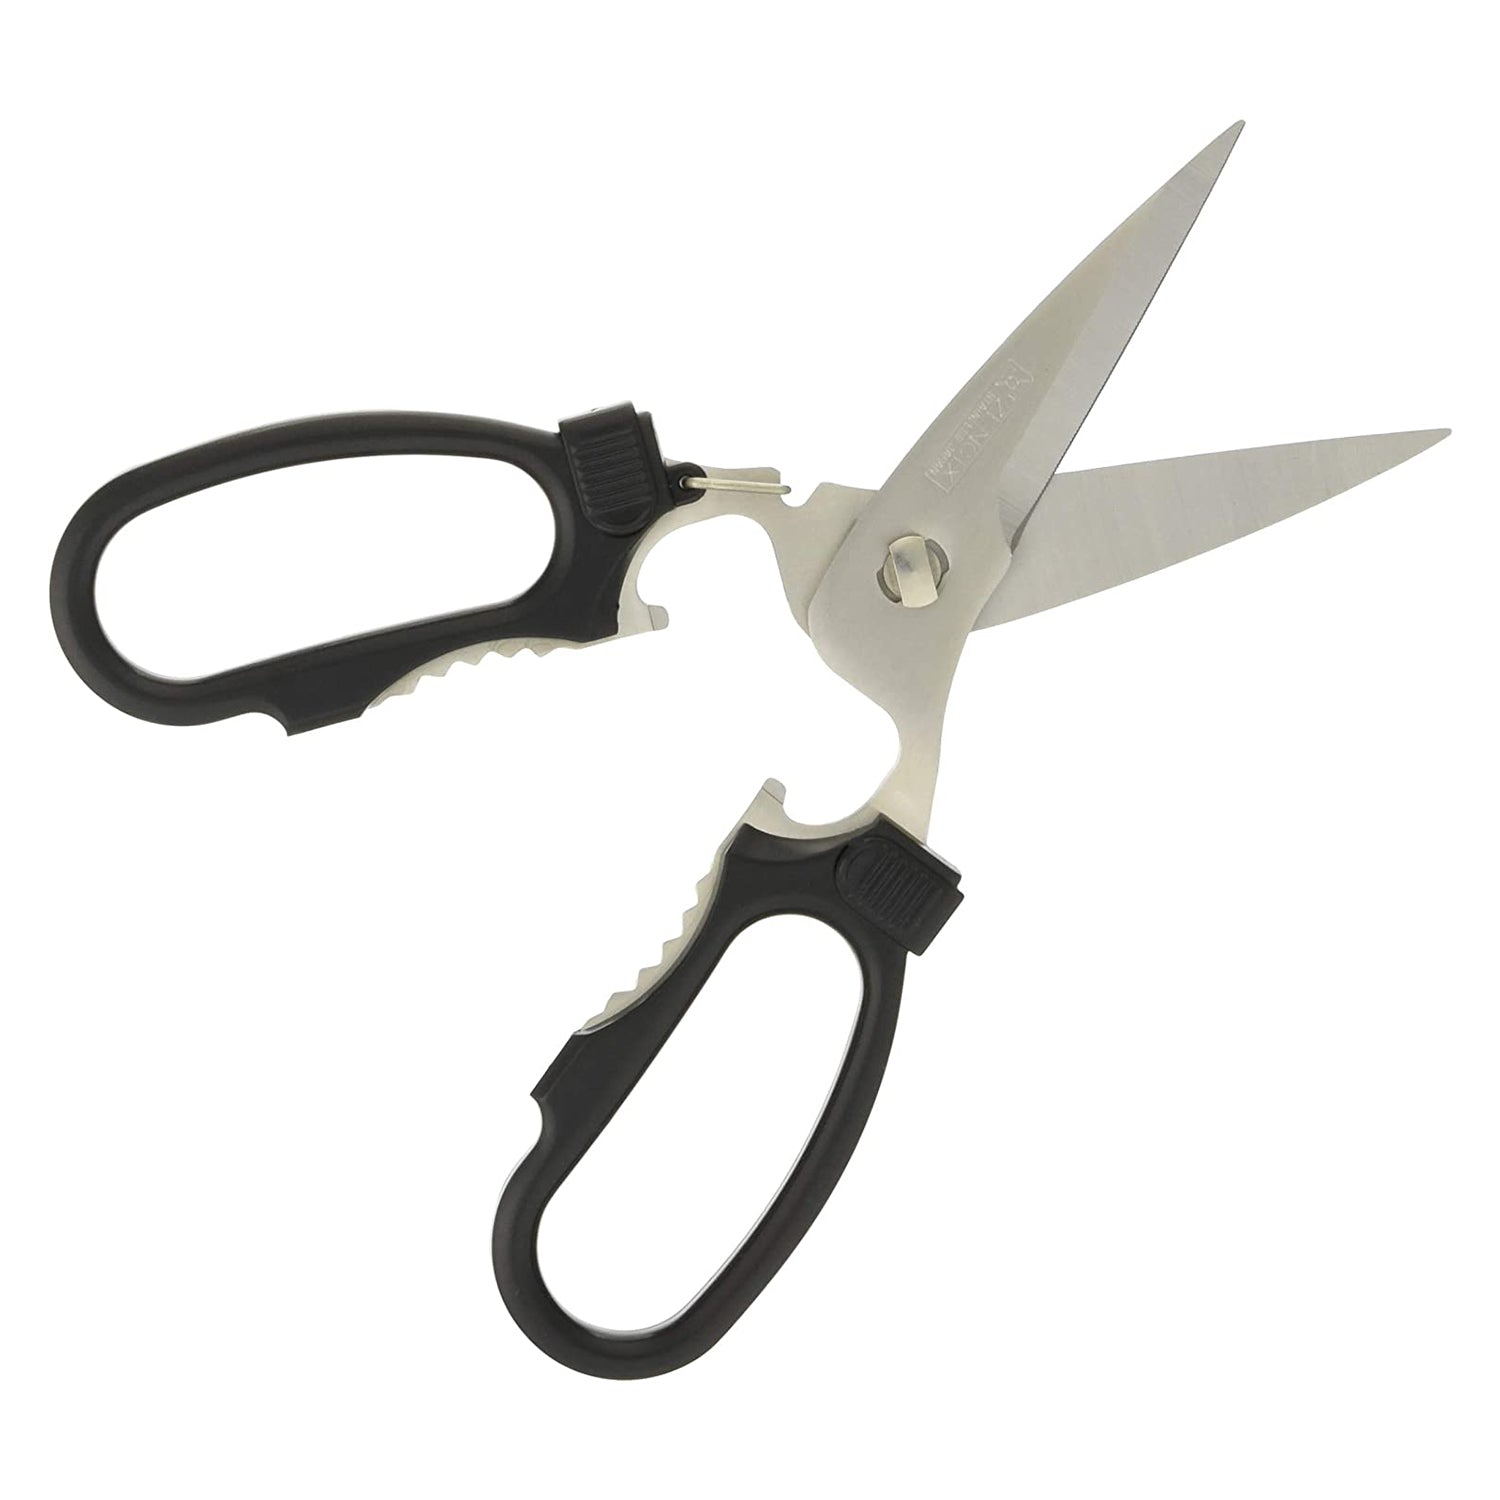 CANARY Japanese Office Scissors for Left Handed 6.8, Made in JAPAN, Heavy  Duty All Metal Razor Sharp Japanese Stainless Steel Blade, Left Hand Desk